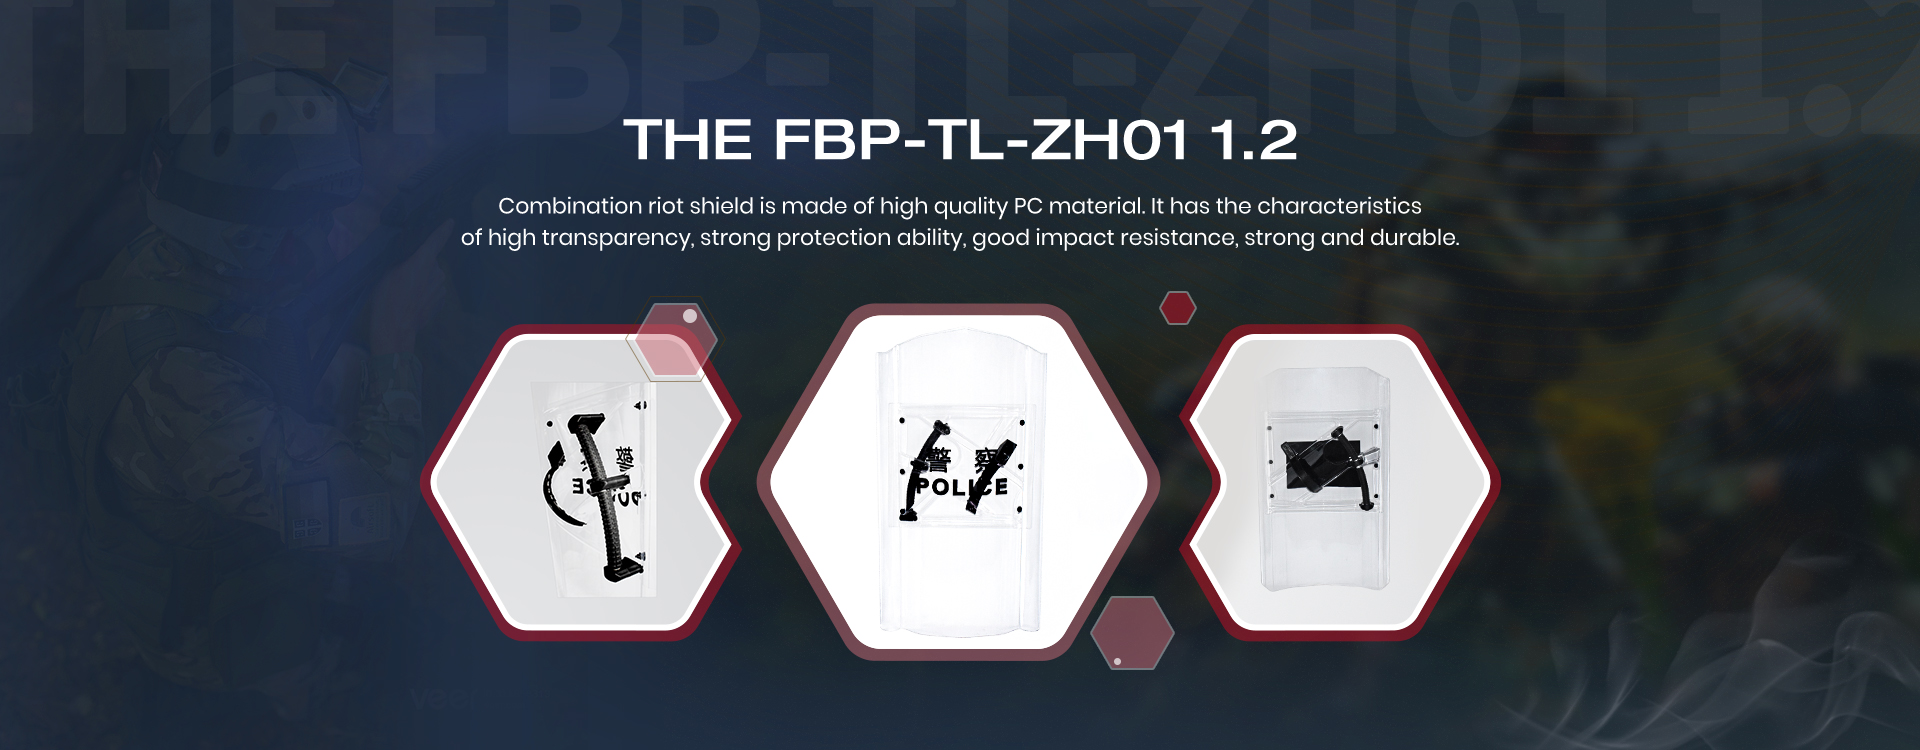 THE FBP-TL-ZHO1 1.2